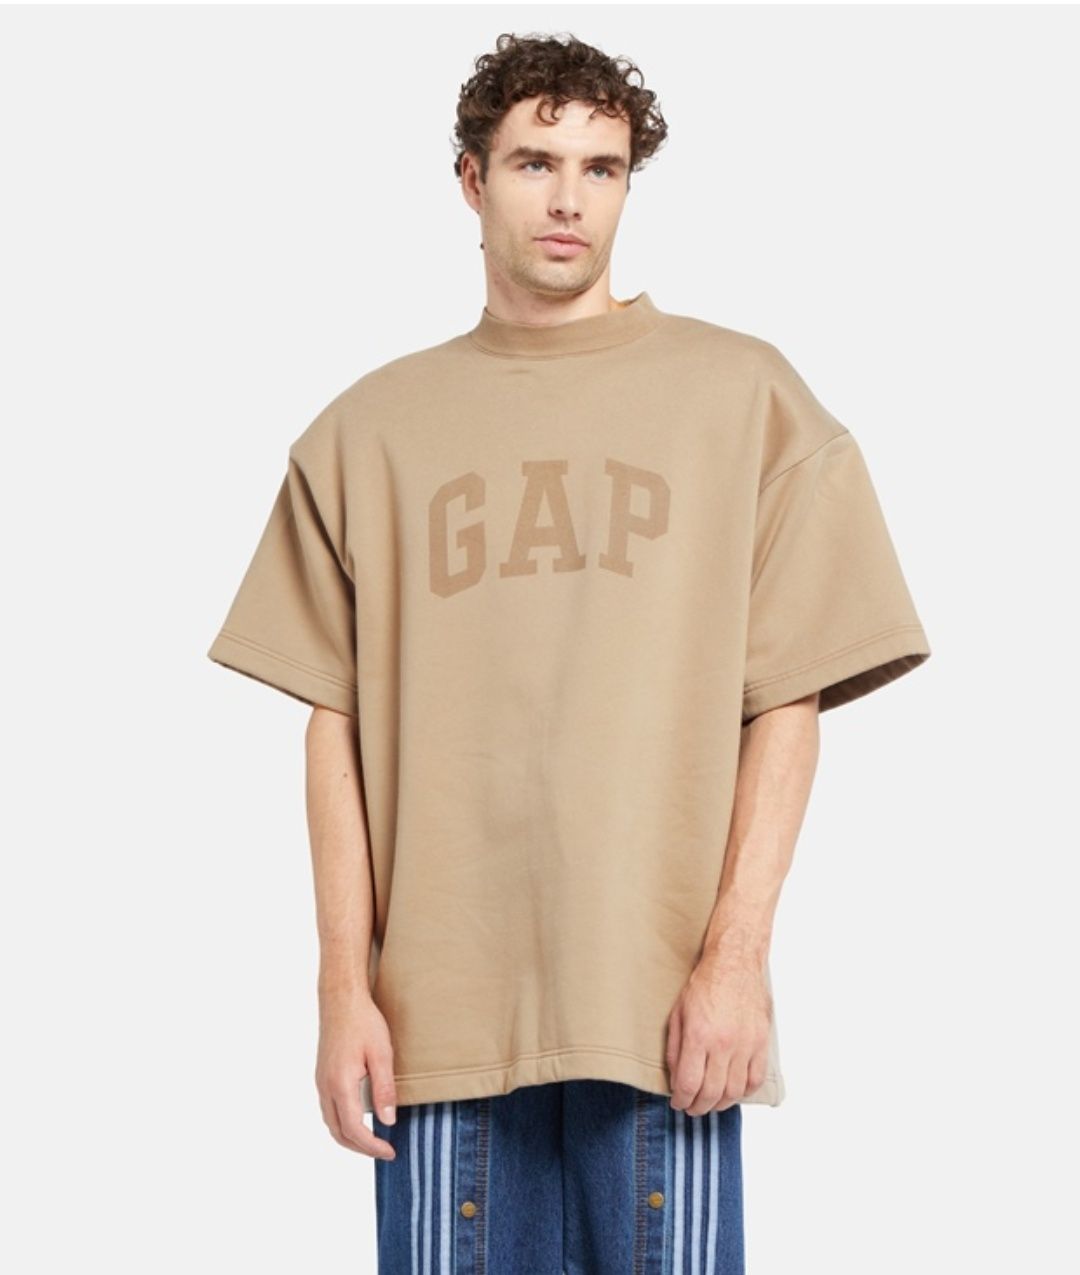 Yeezy Gap by Balenciaga ORIGINAL